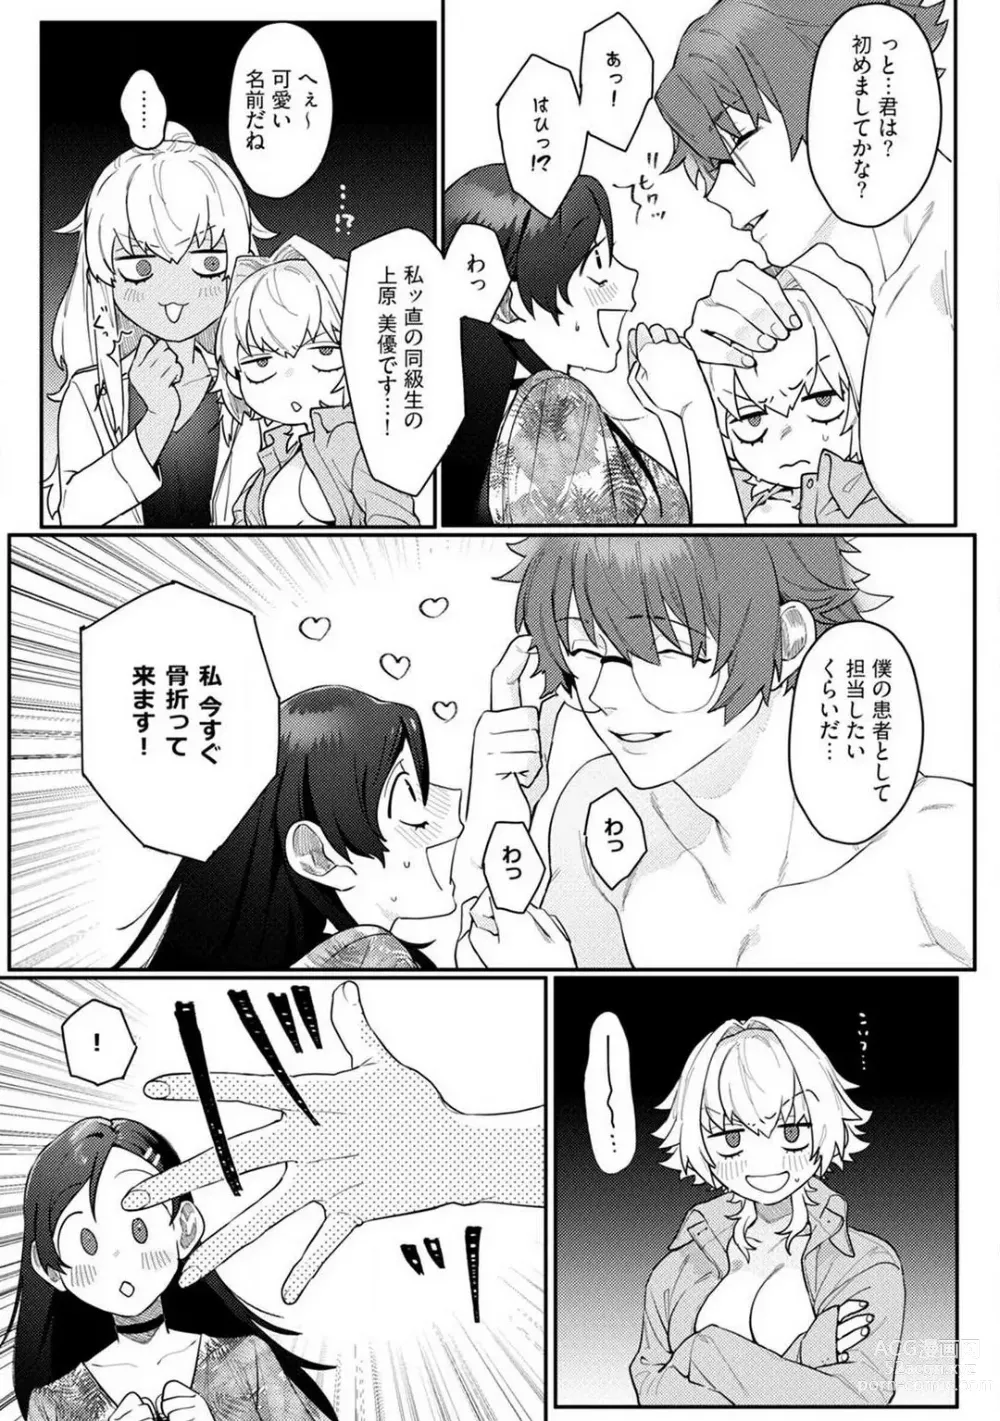 Page 103 of manga Onnanoko no Karada 1-3